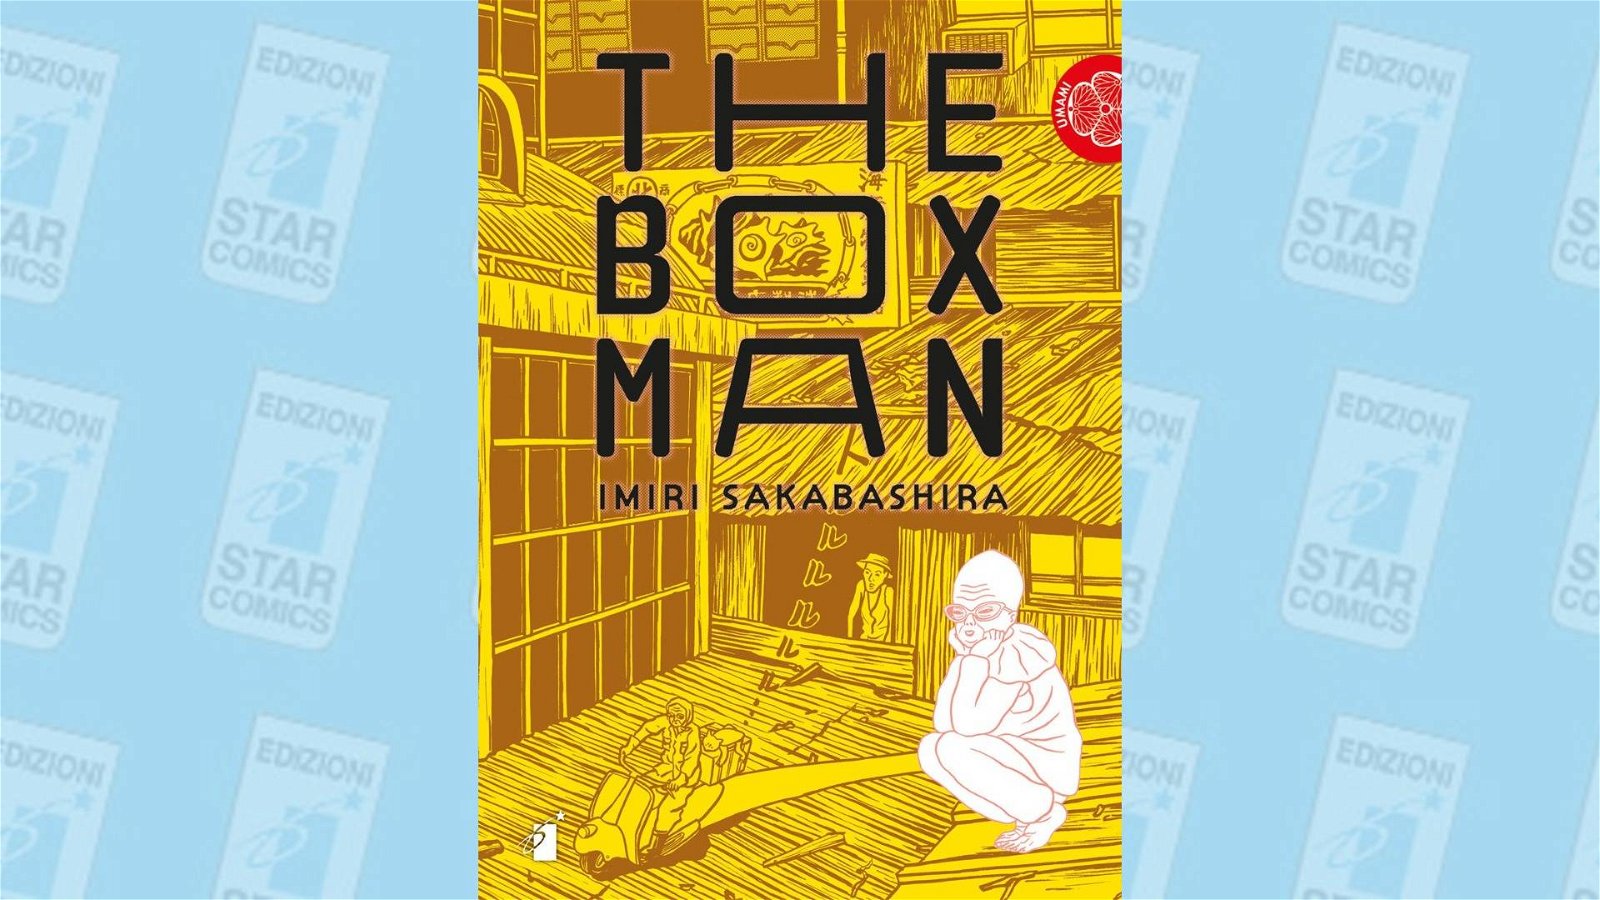 Immagine di The Box Man, l'odissea di Imiri Sakabashira firmata Star Comics!